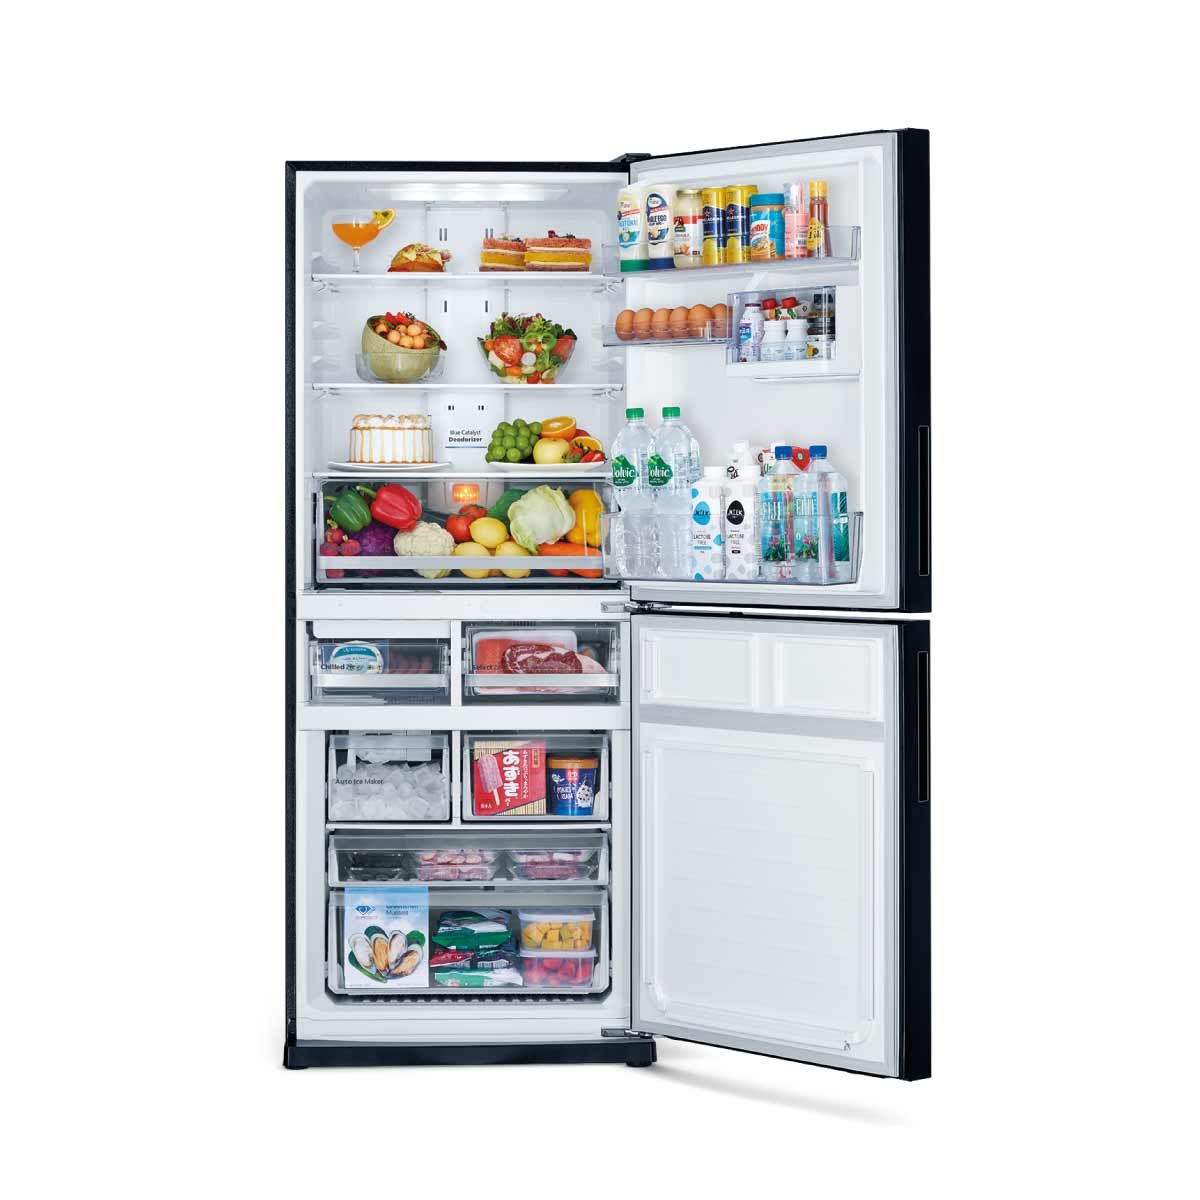 MITSUBISHI ELECTRIC  ตู้เย็น BOTTOM FREEZER 14.9Q  สีดำ รุ่น MR-HS46EXGB